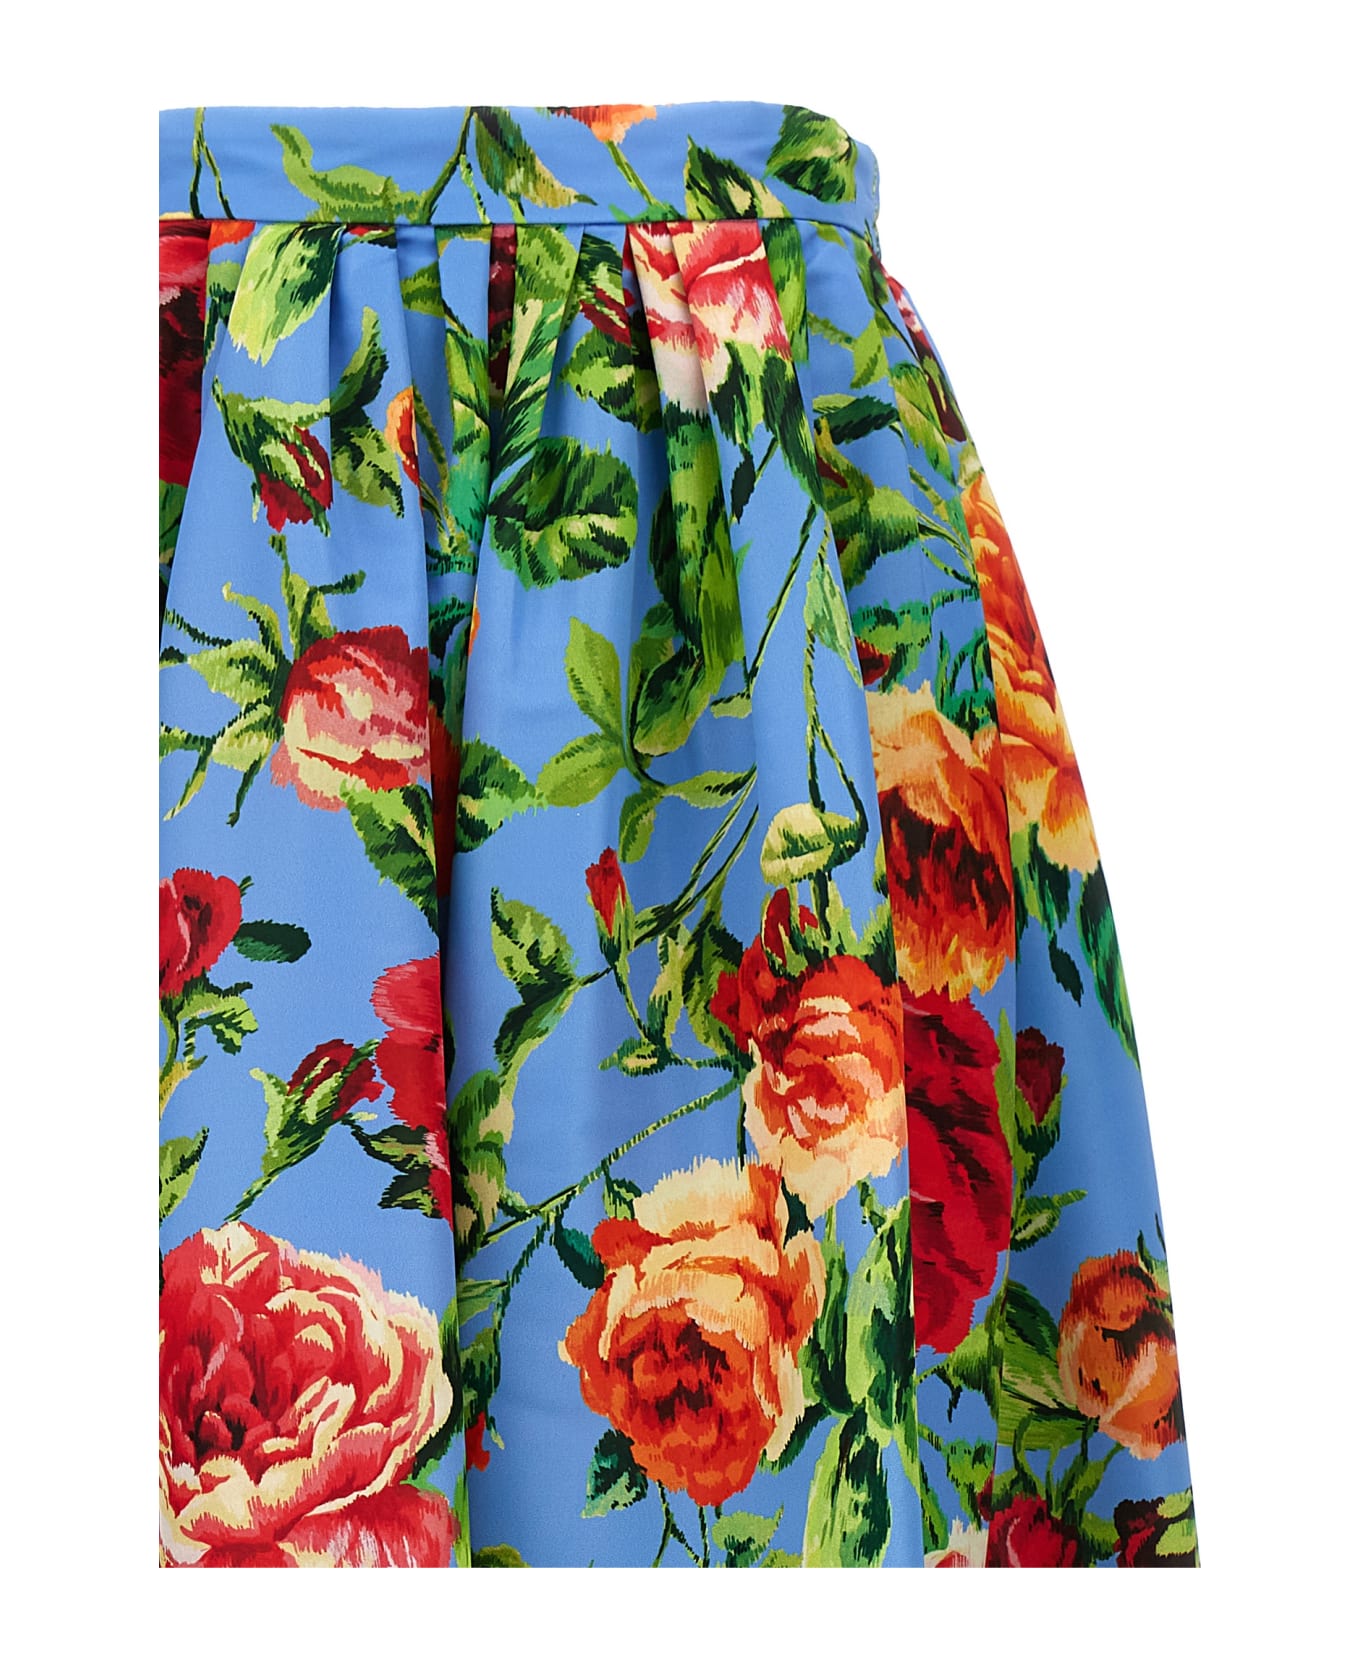 Carolina Herrera Long Floral Skirt - Multicolor スカート